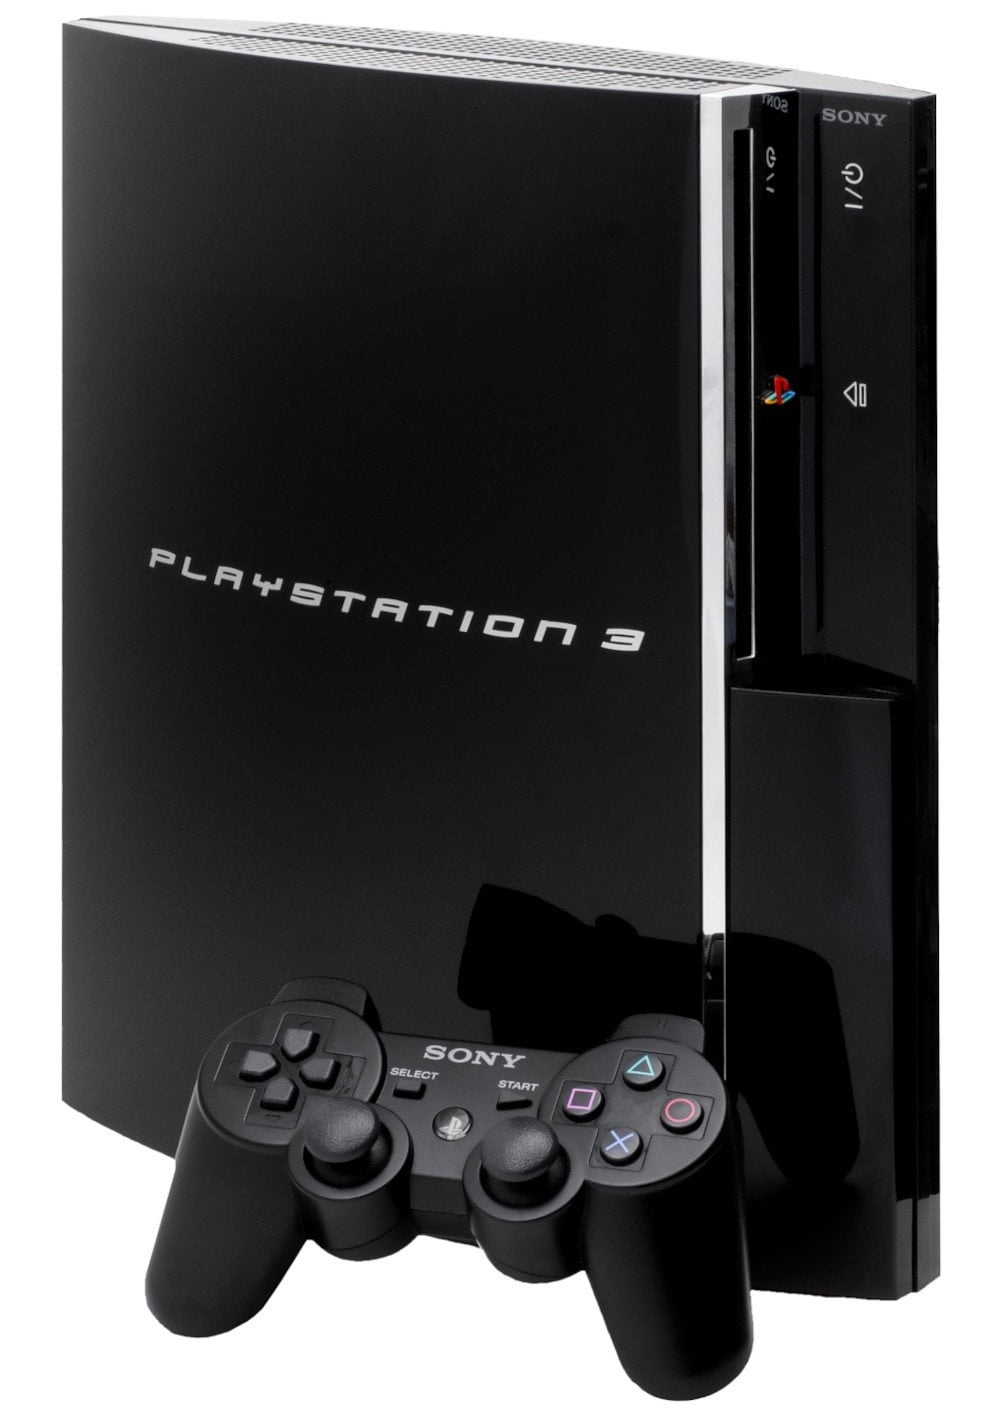 PlayStation 3 PS3 Original Refurbished - Walmart.com